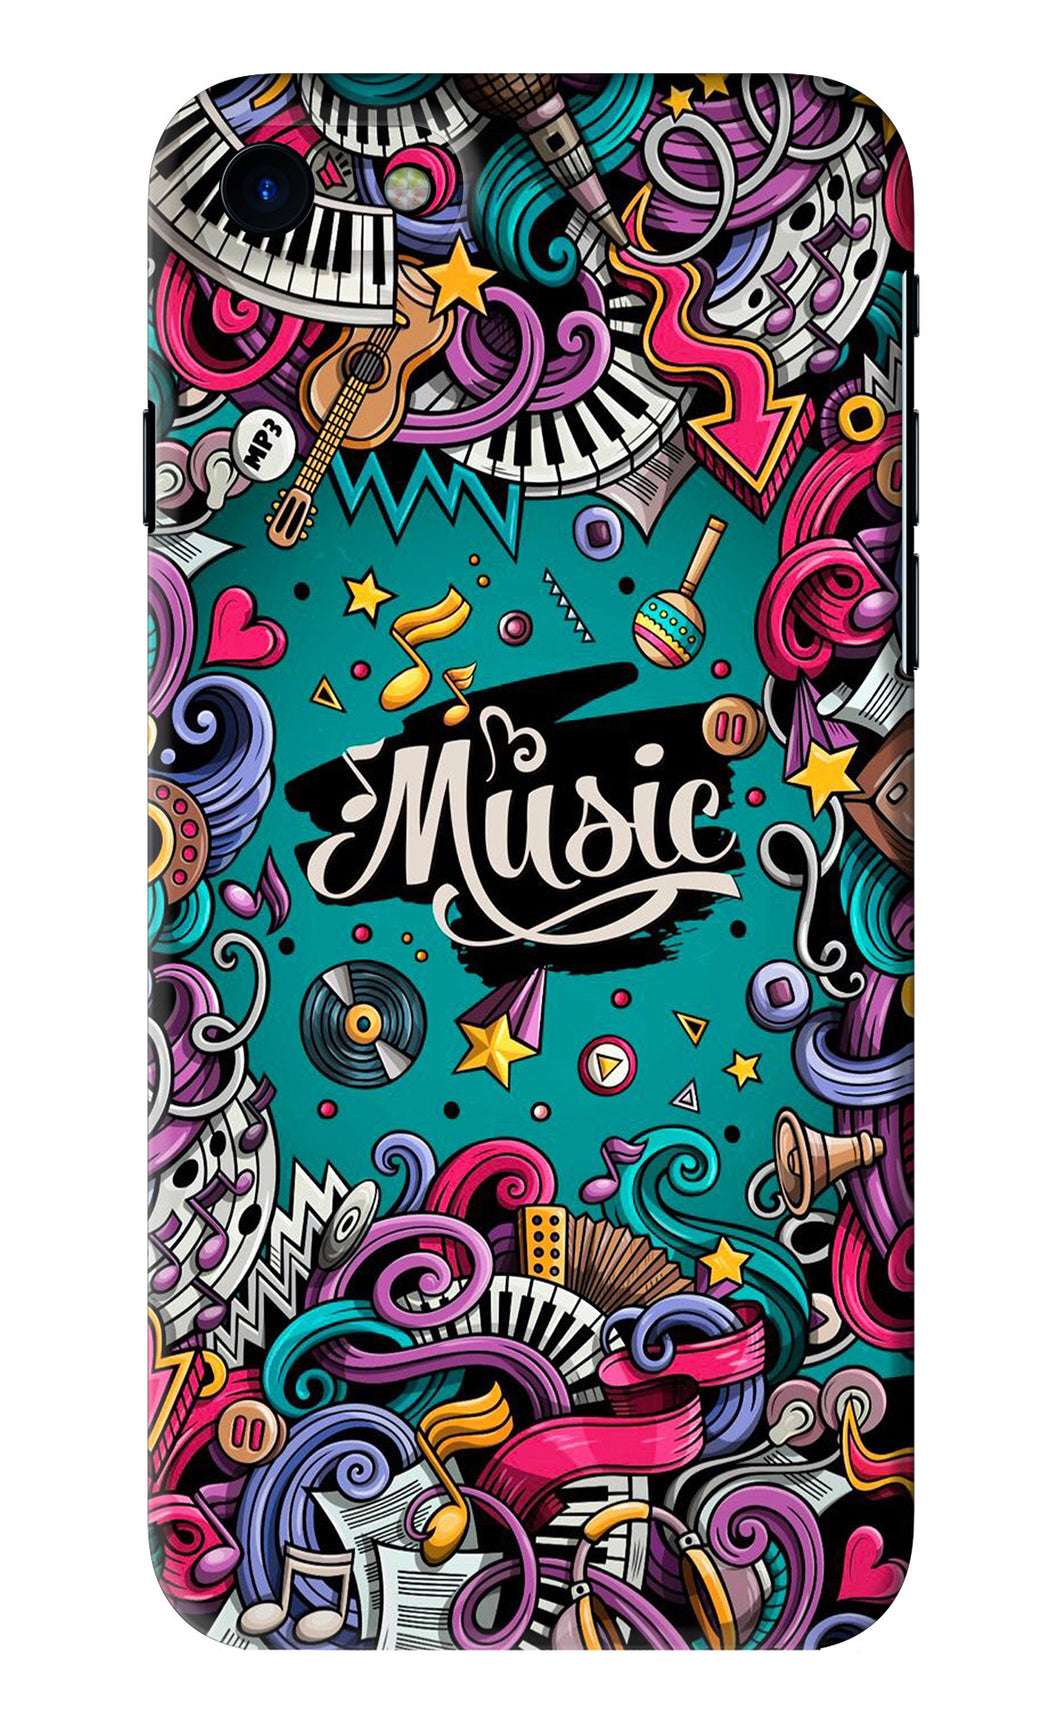 Music Graffiti iPhone 8 Back Skin Wrap